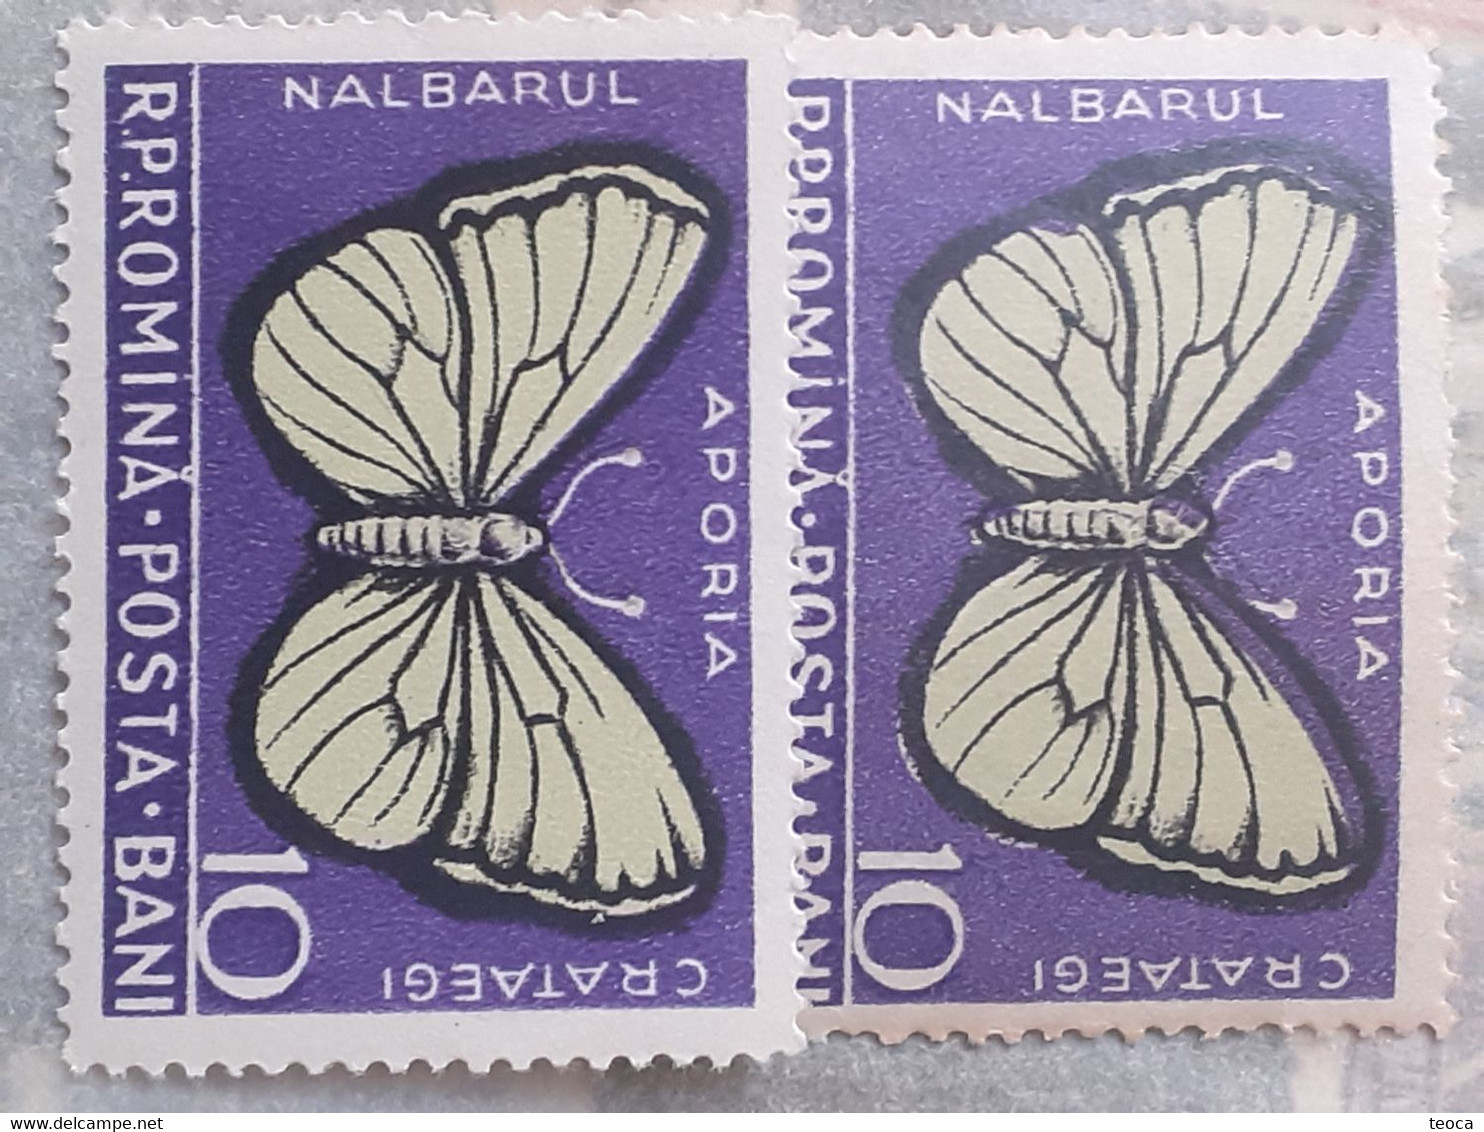 Errors Romanua 1956  # MI 1586 White Butterfly  Printed  With Move Moth Shifted To The Right Unused - Abarten Und Kuriositäten